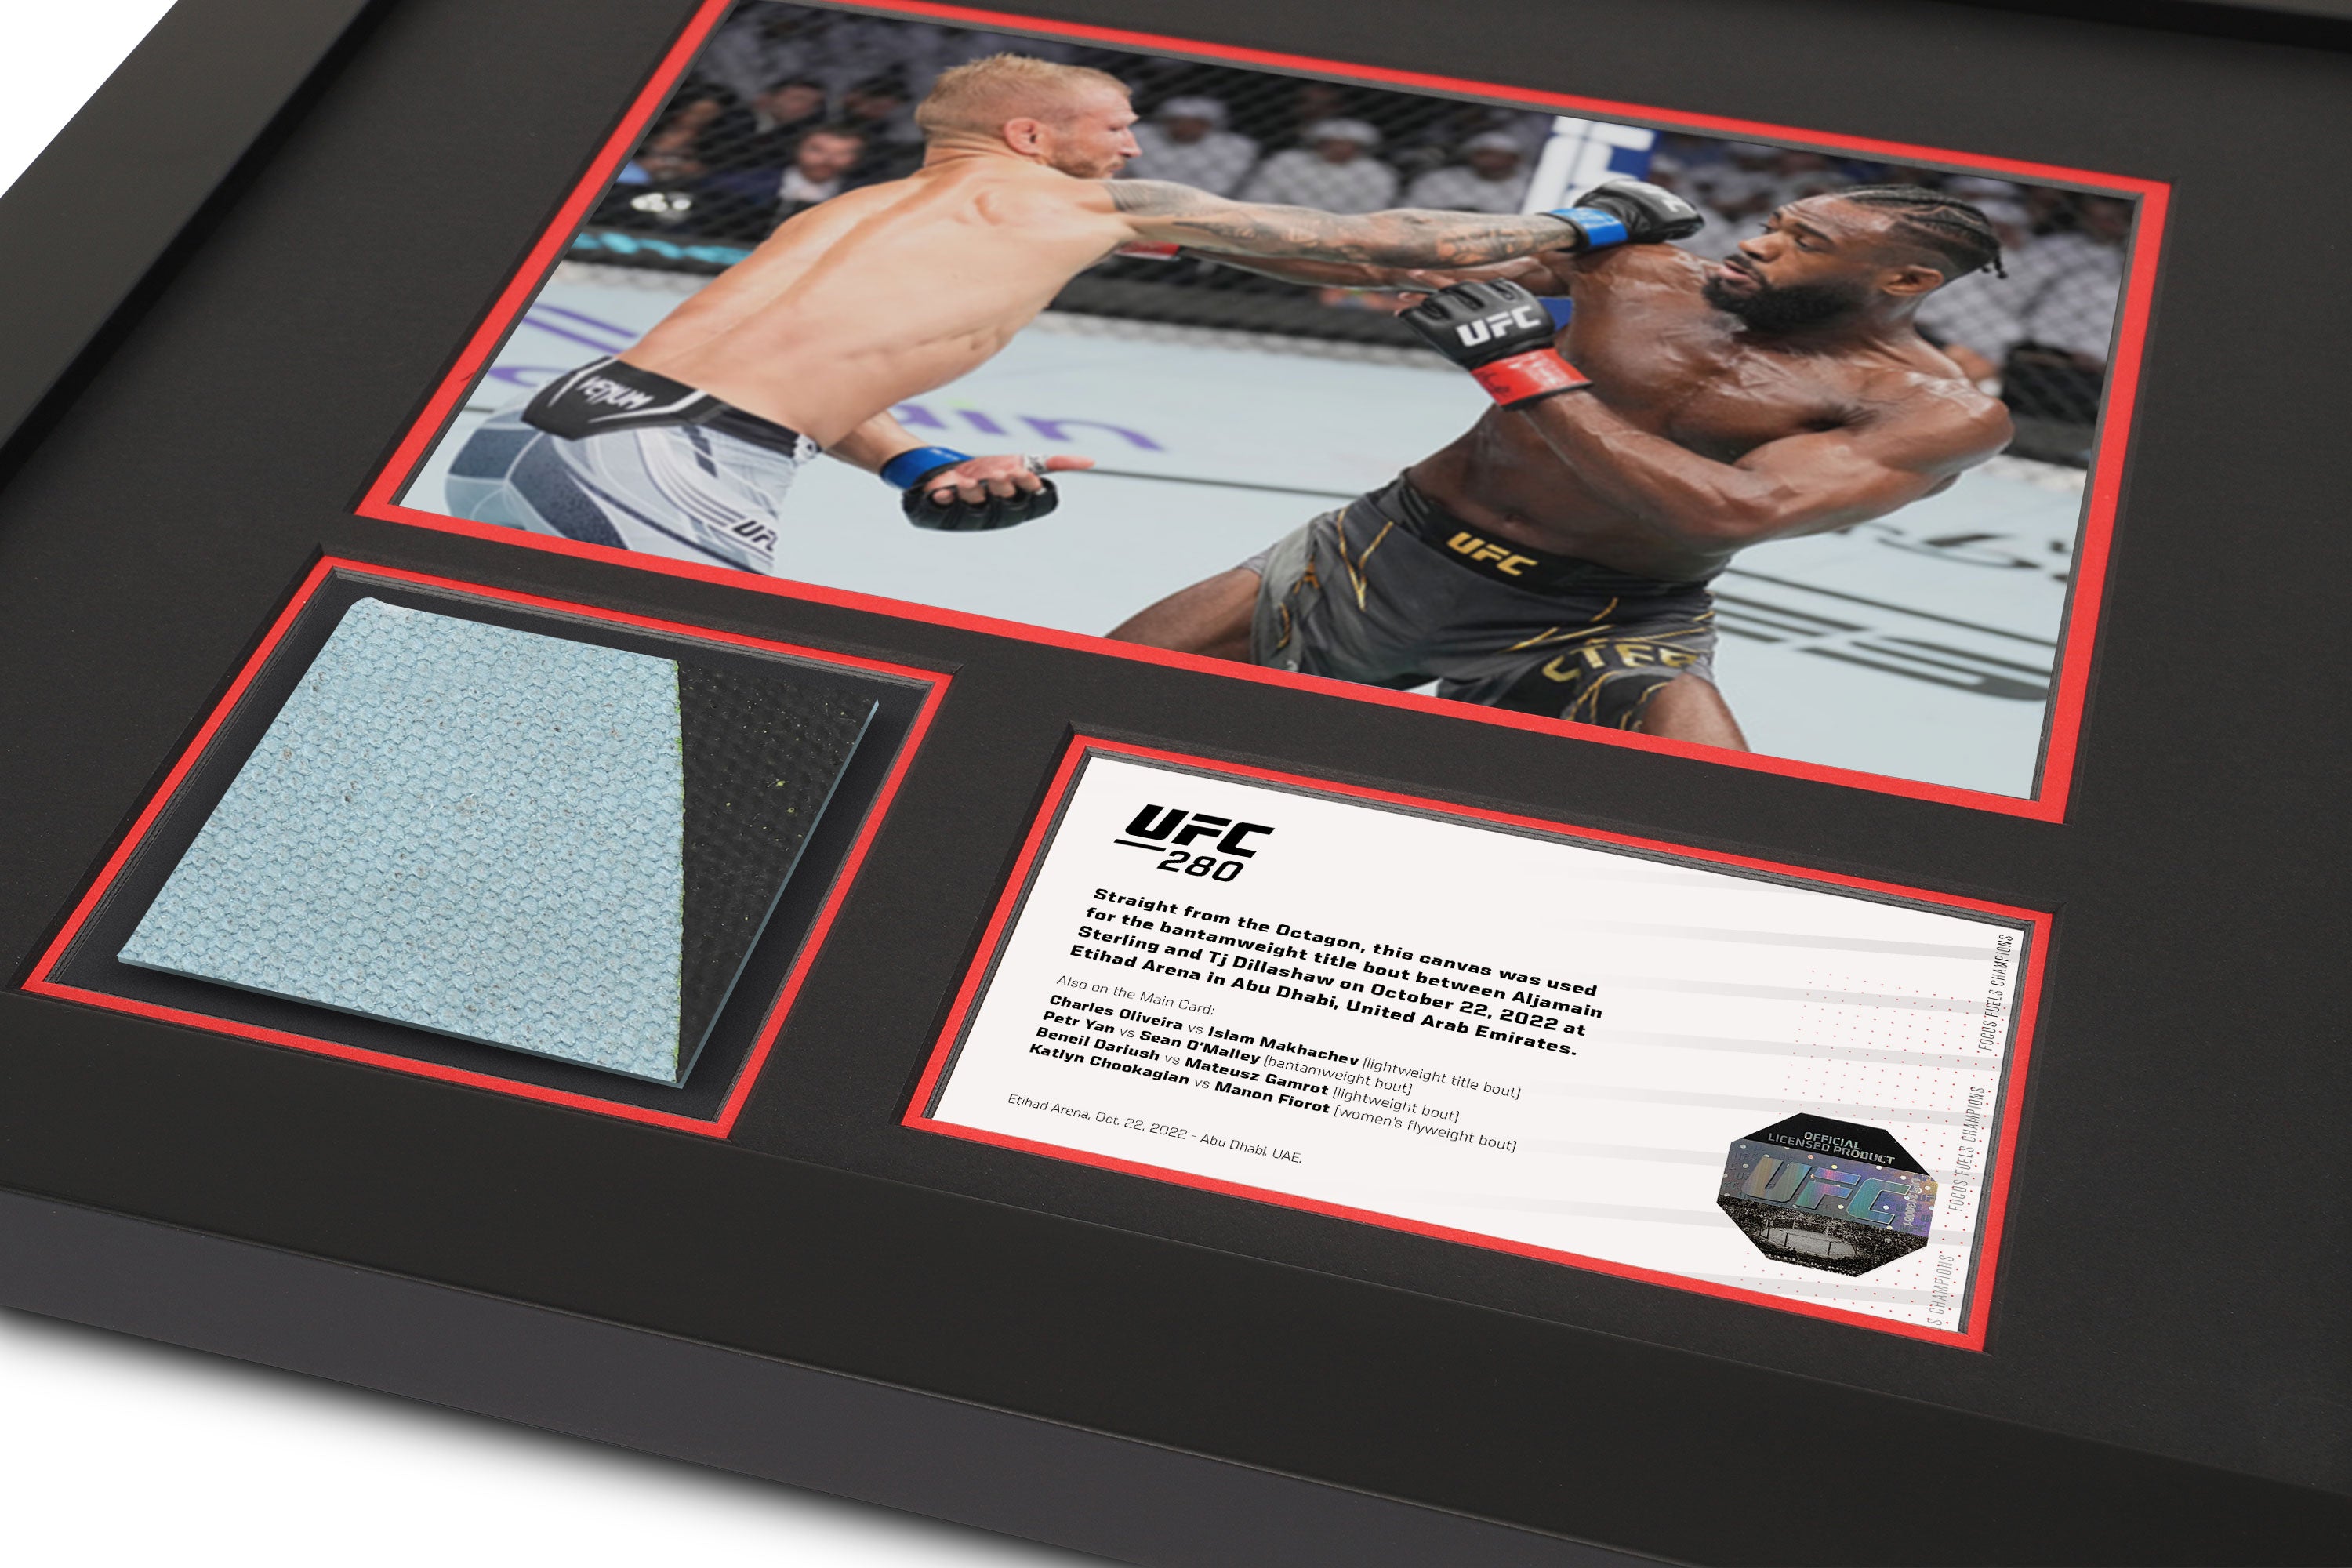 UFC 280: Sterling vs Dillashaw Canvas & Photo